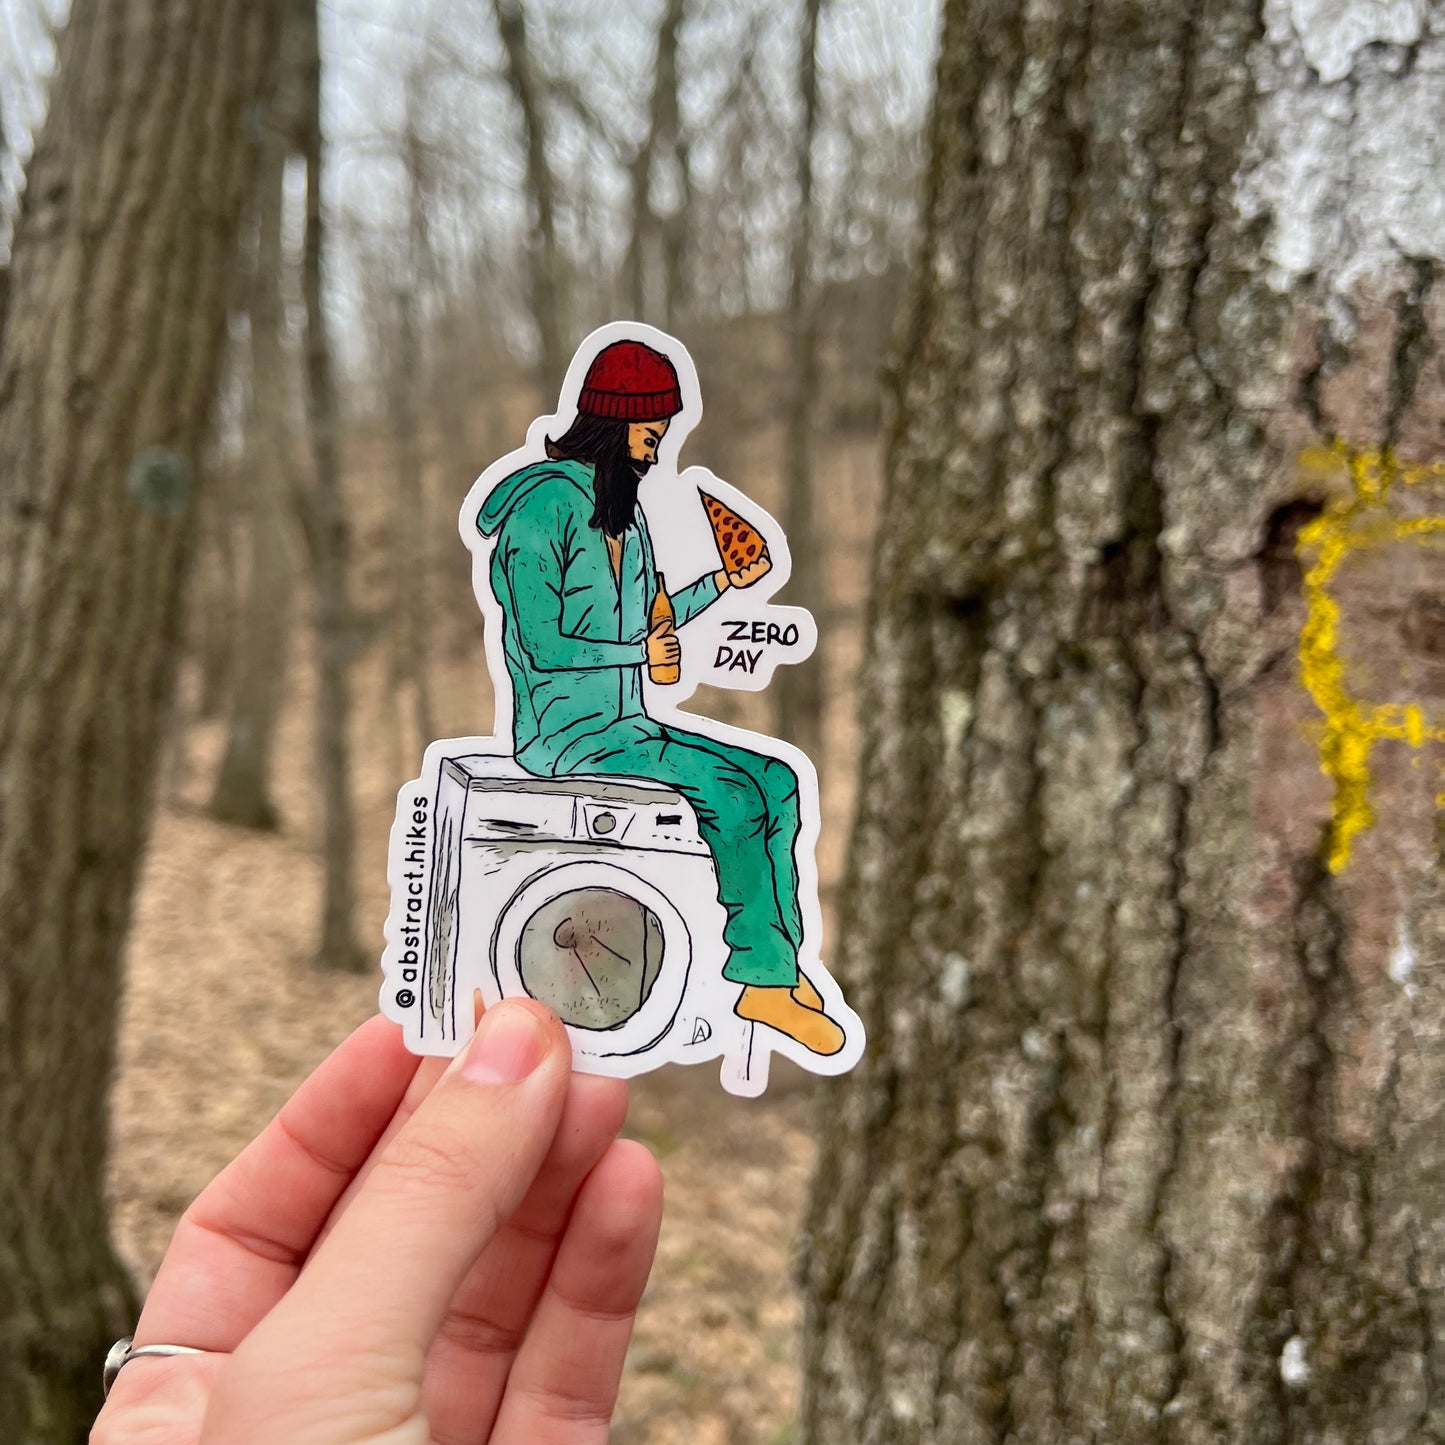 Hiking Sticker: "Zero Day"